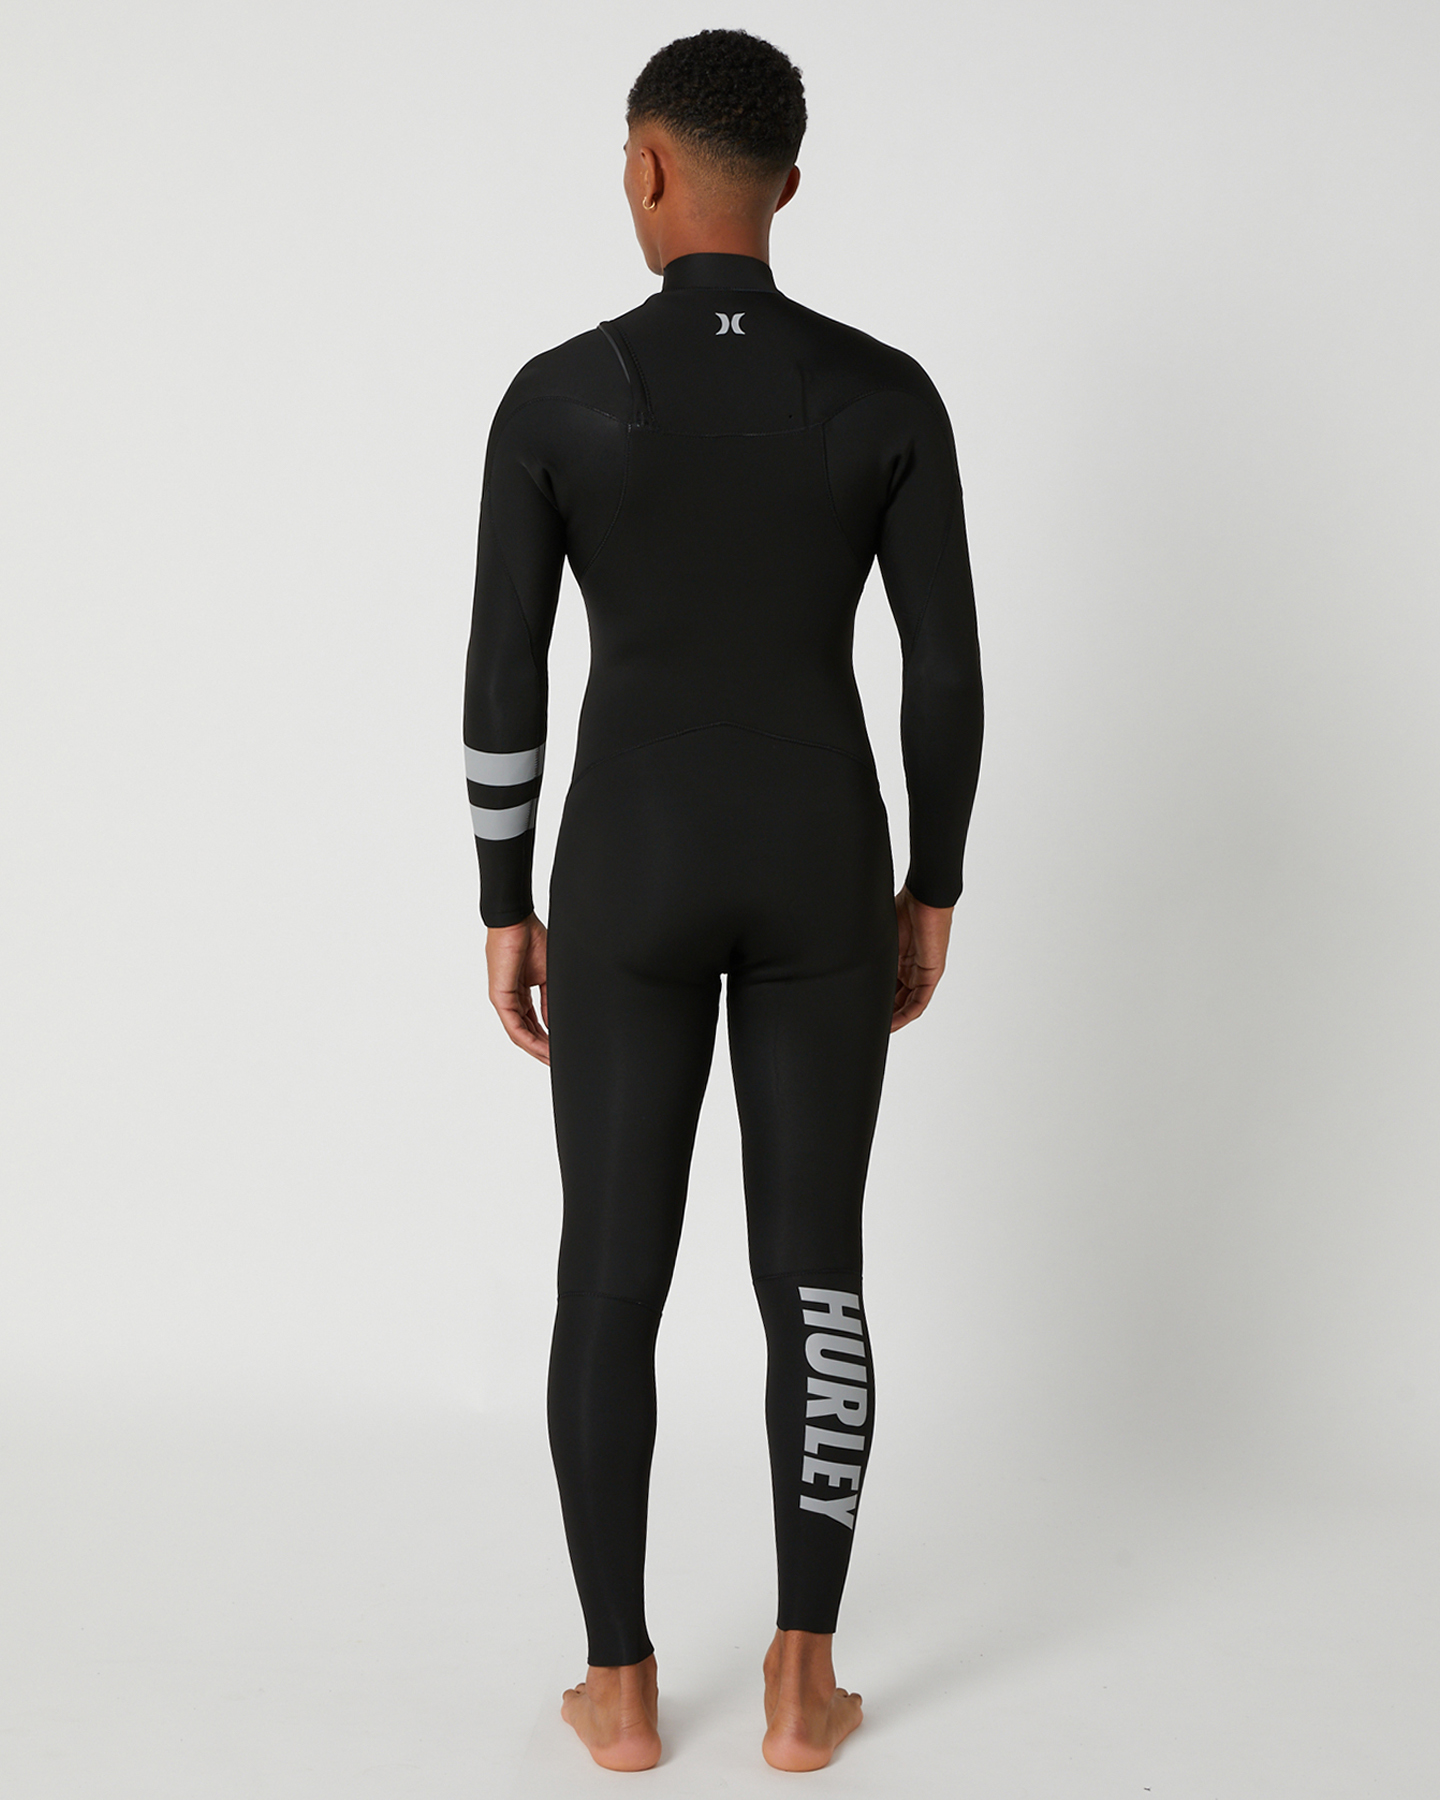 Hoop van Tegenwerken Walging Hurley Mens Advant 3/2Mm Full Wetsuit - Black | SurfStitch